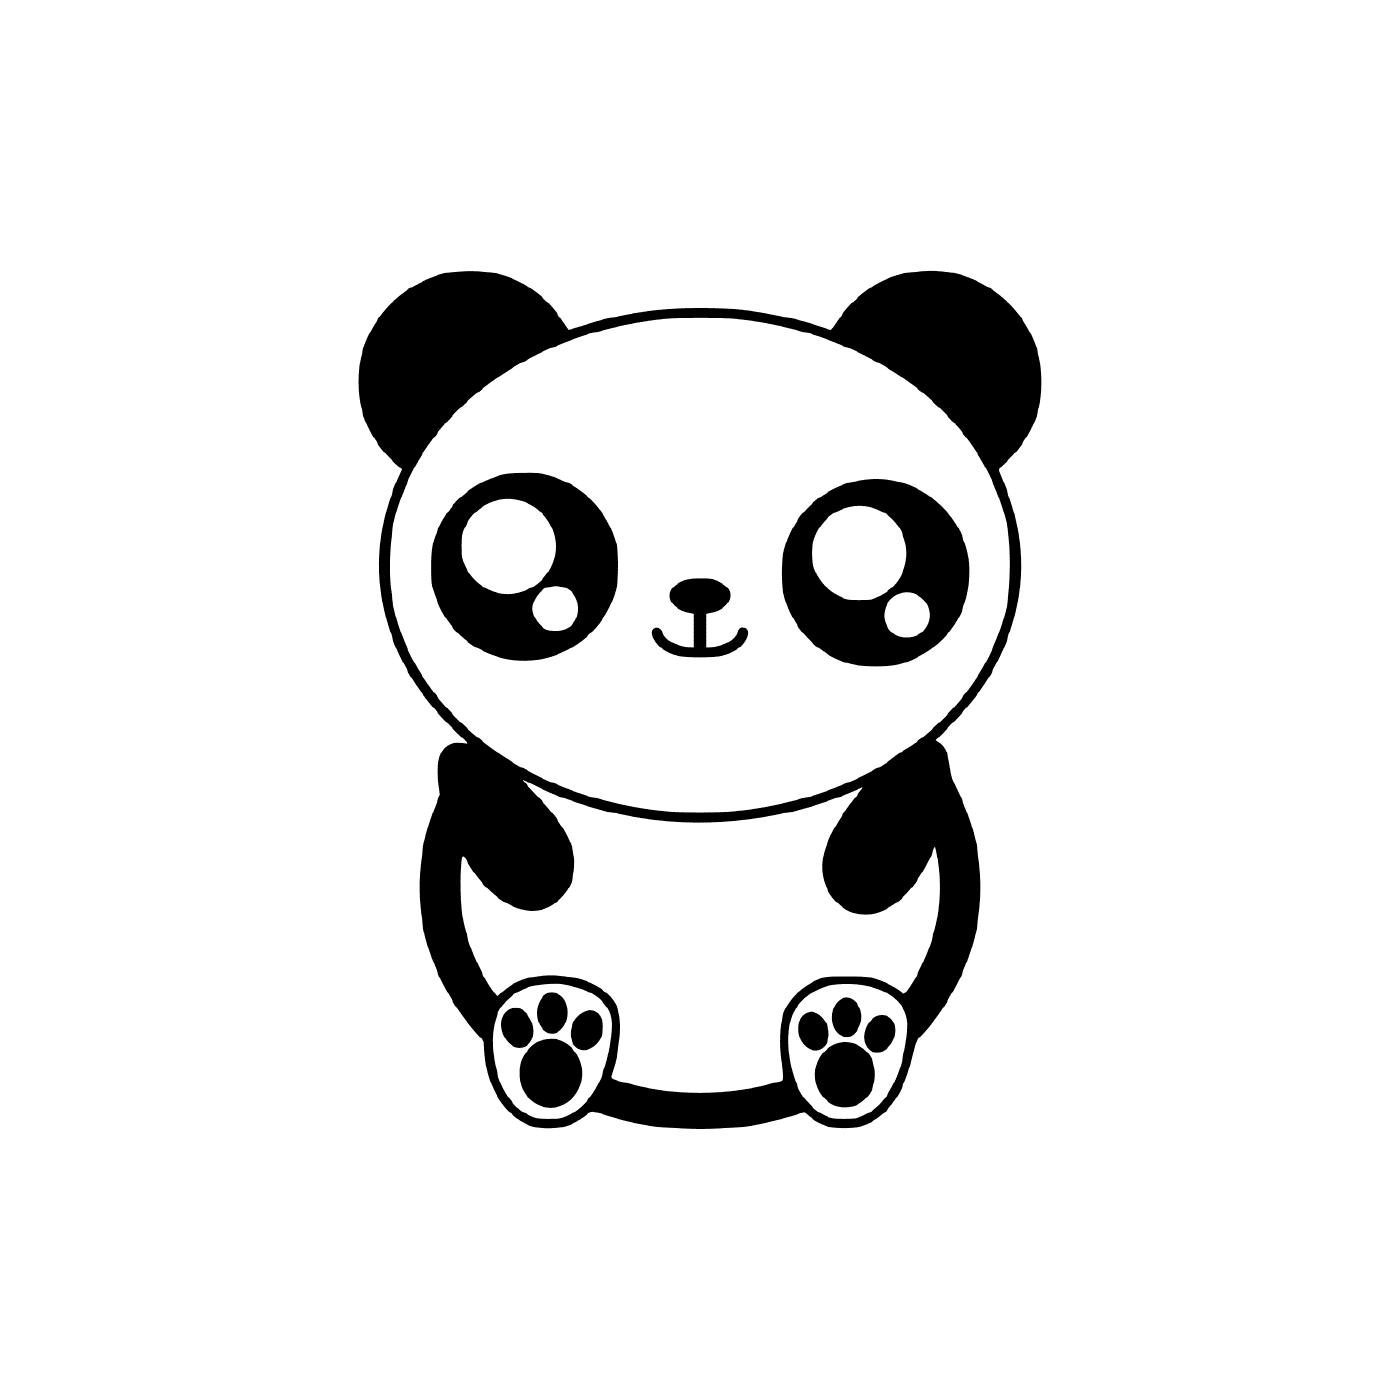  Un panda carino 